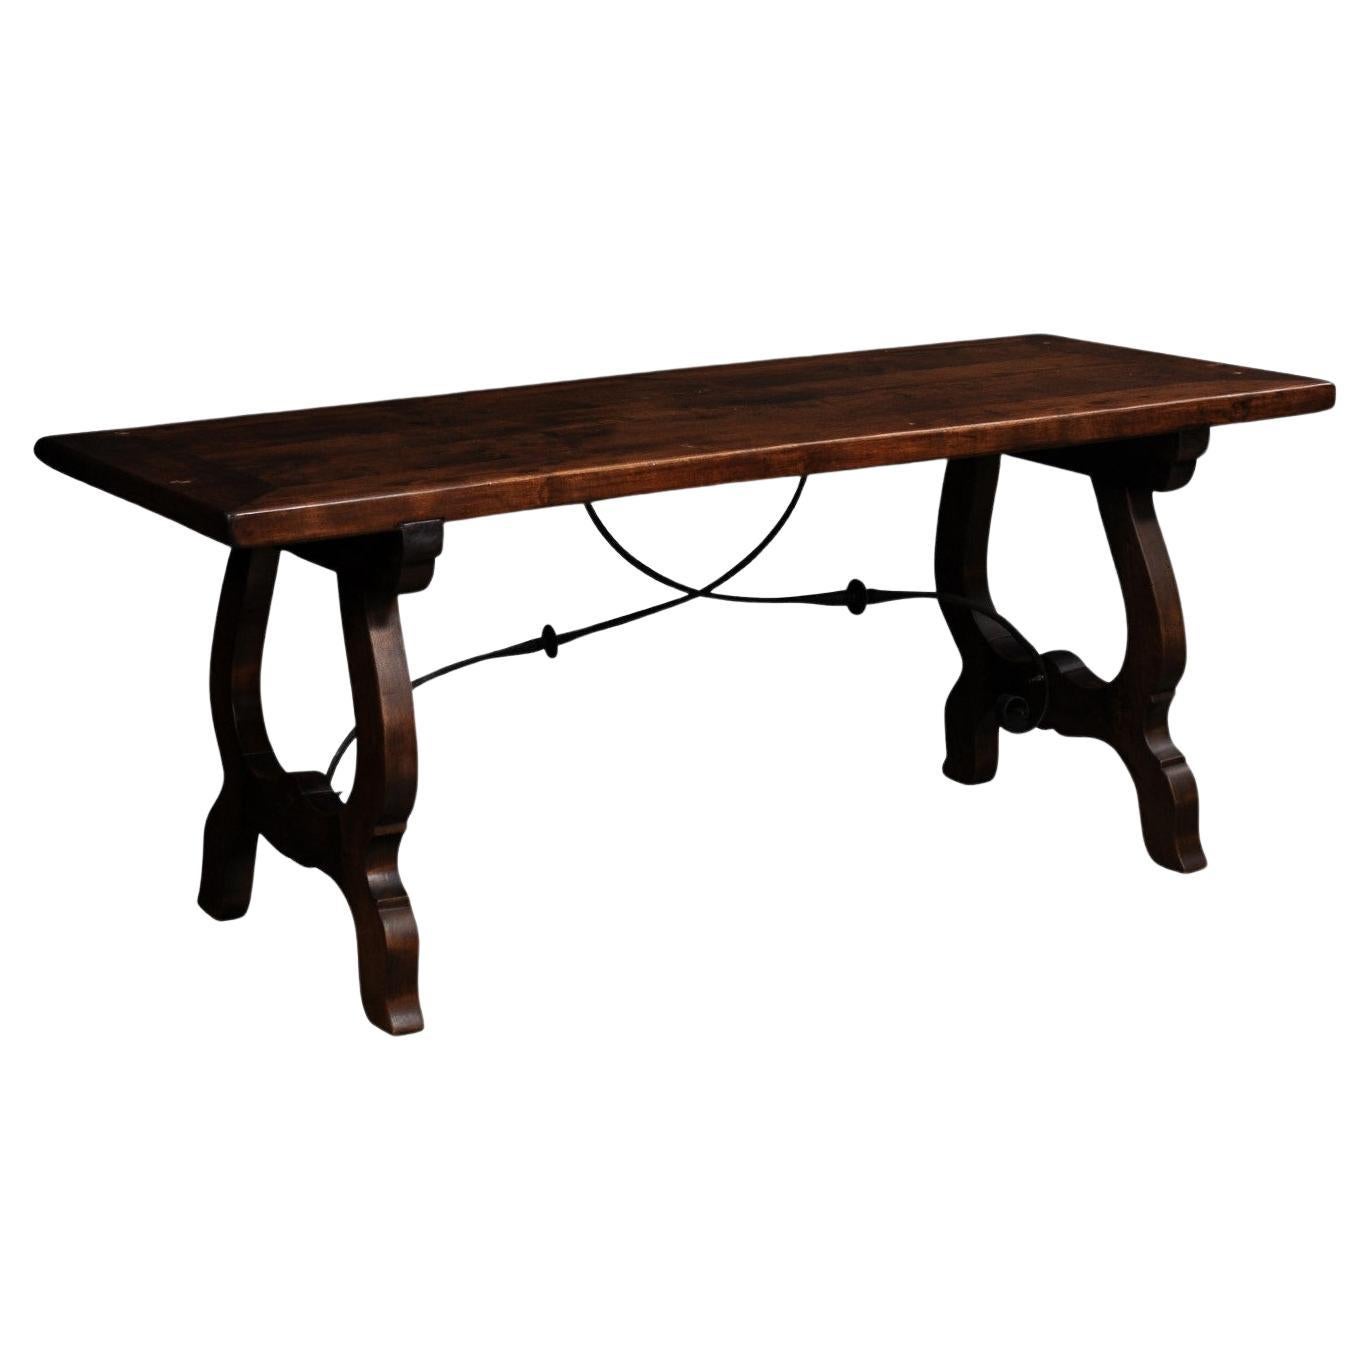 Table Fratino de style baroque espagnol avec base en forme de lyre et traverse en fer en vente